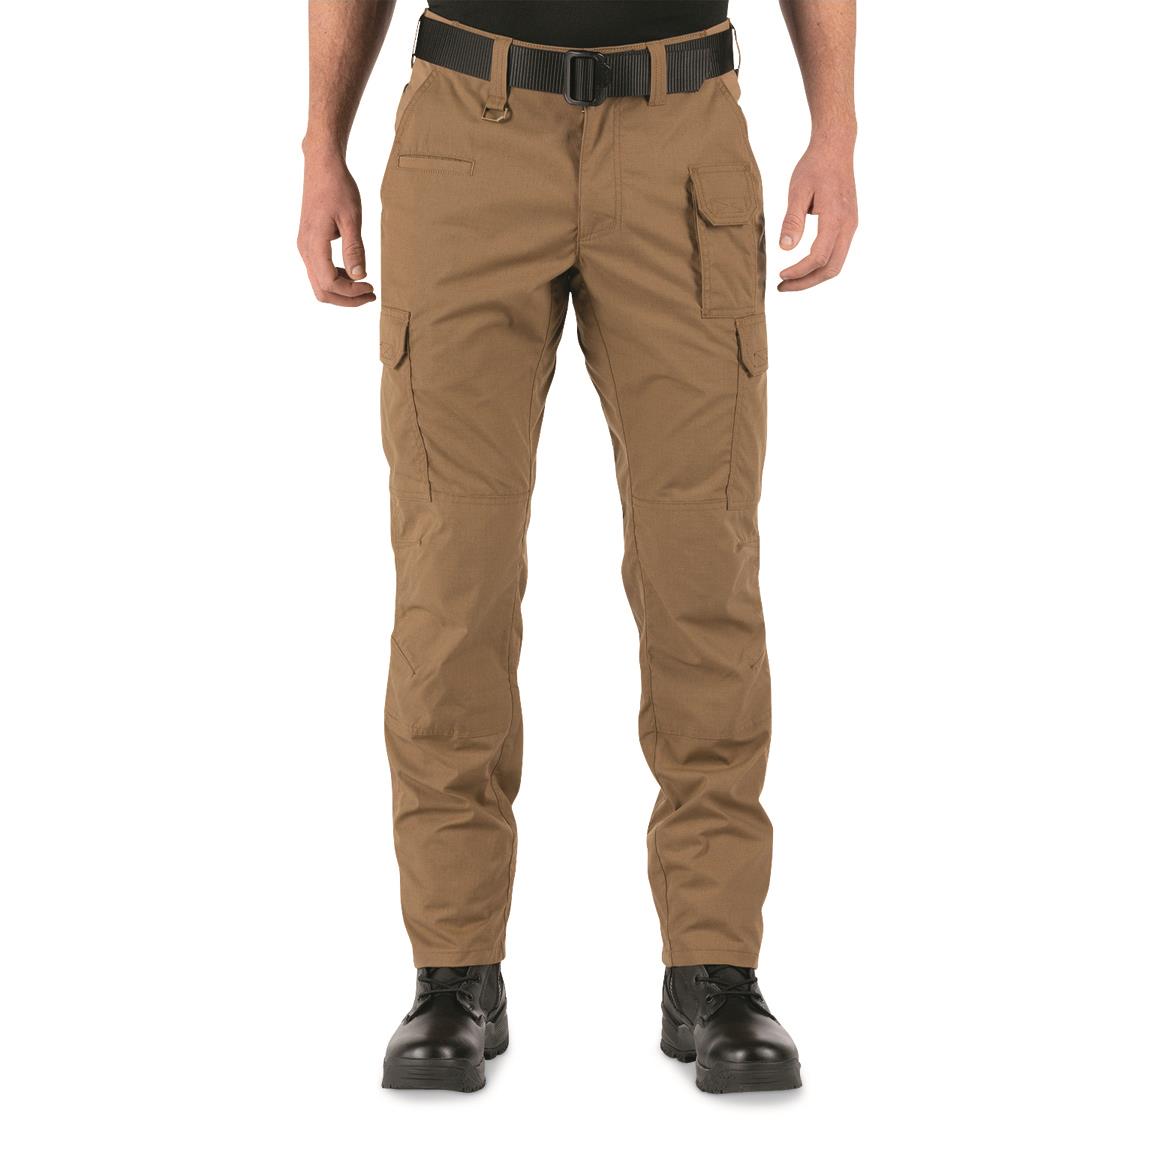 5.11 Tactical Men's ABR Pro Tactical Pants, Straight Fit, Kangaroo